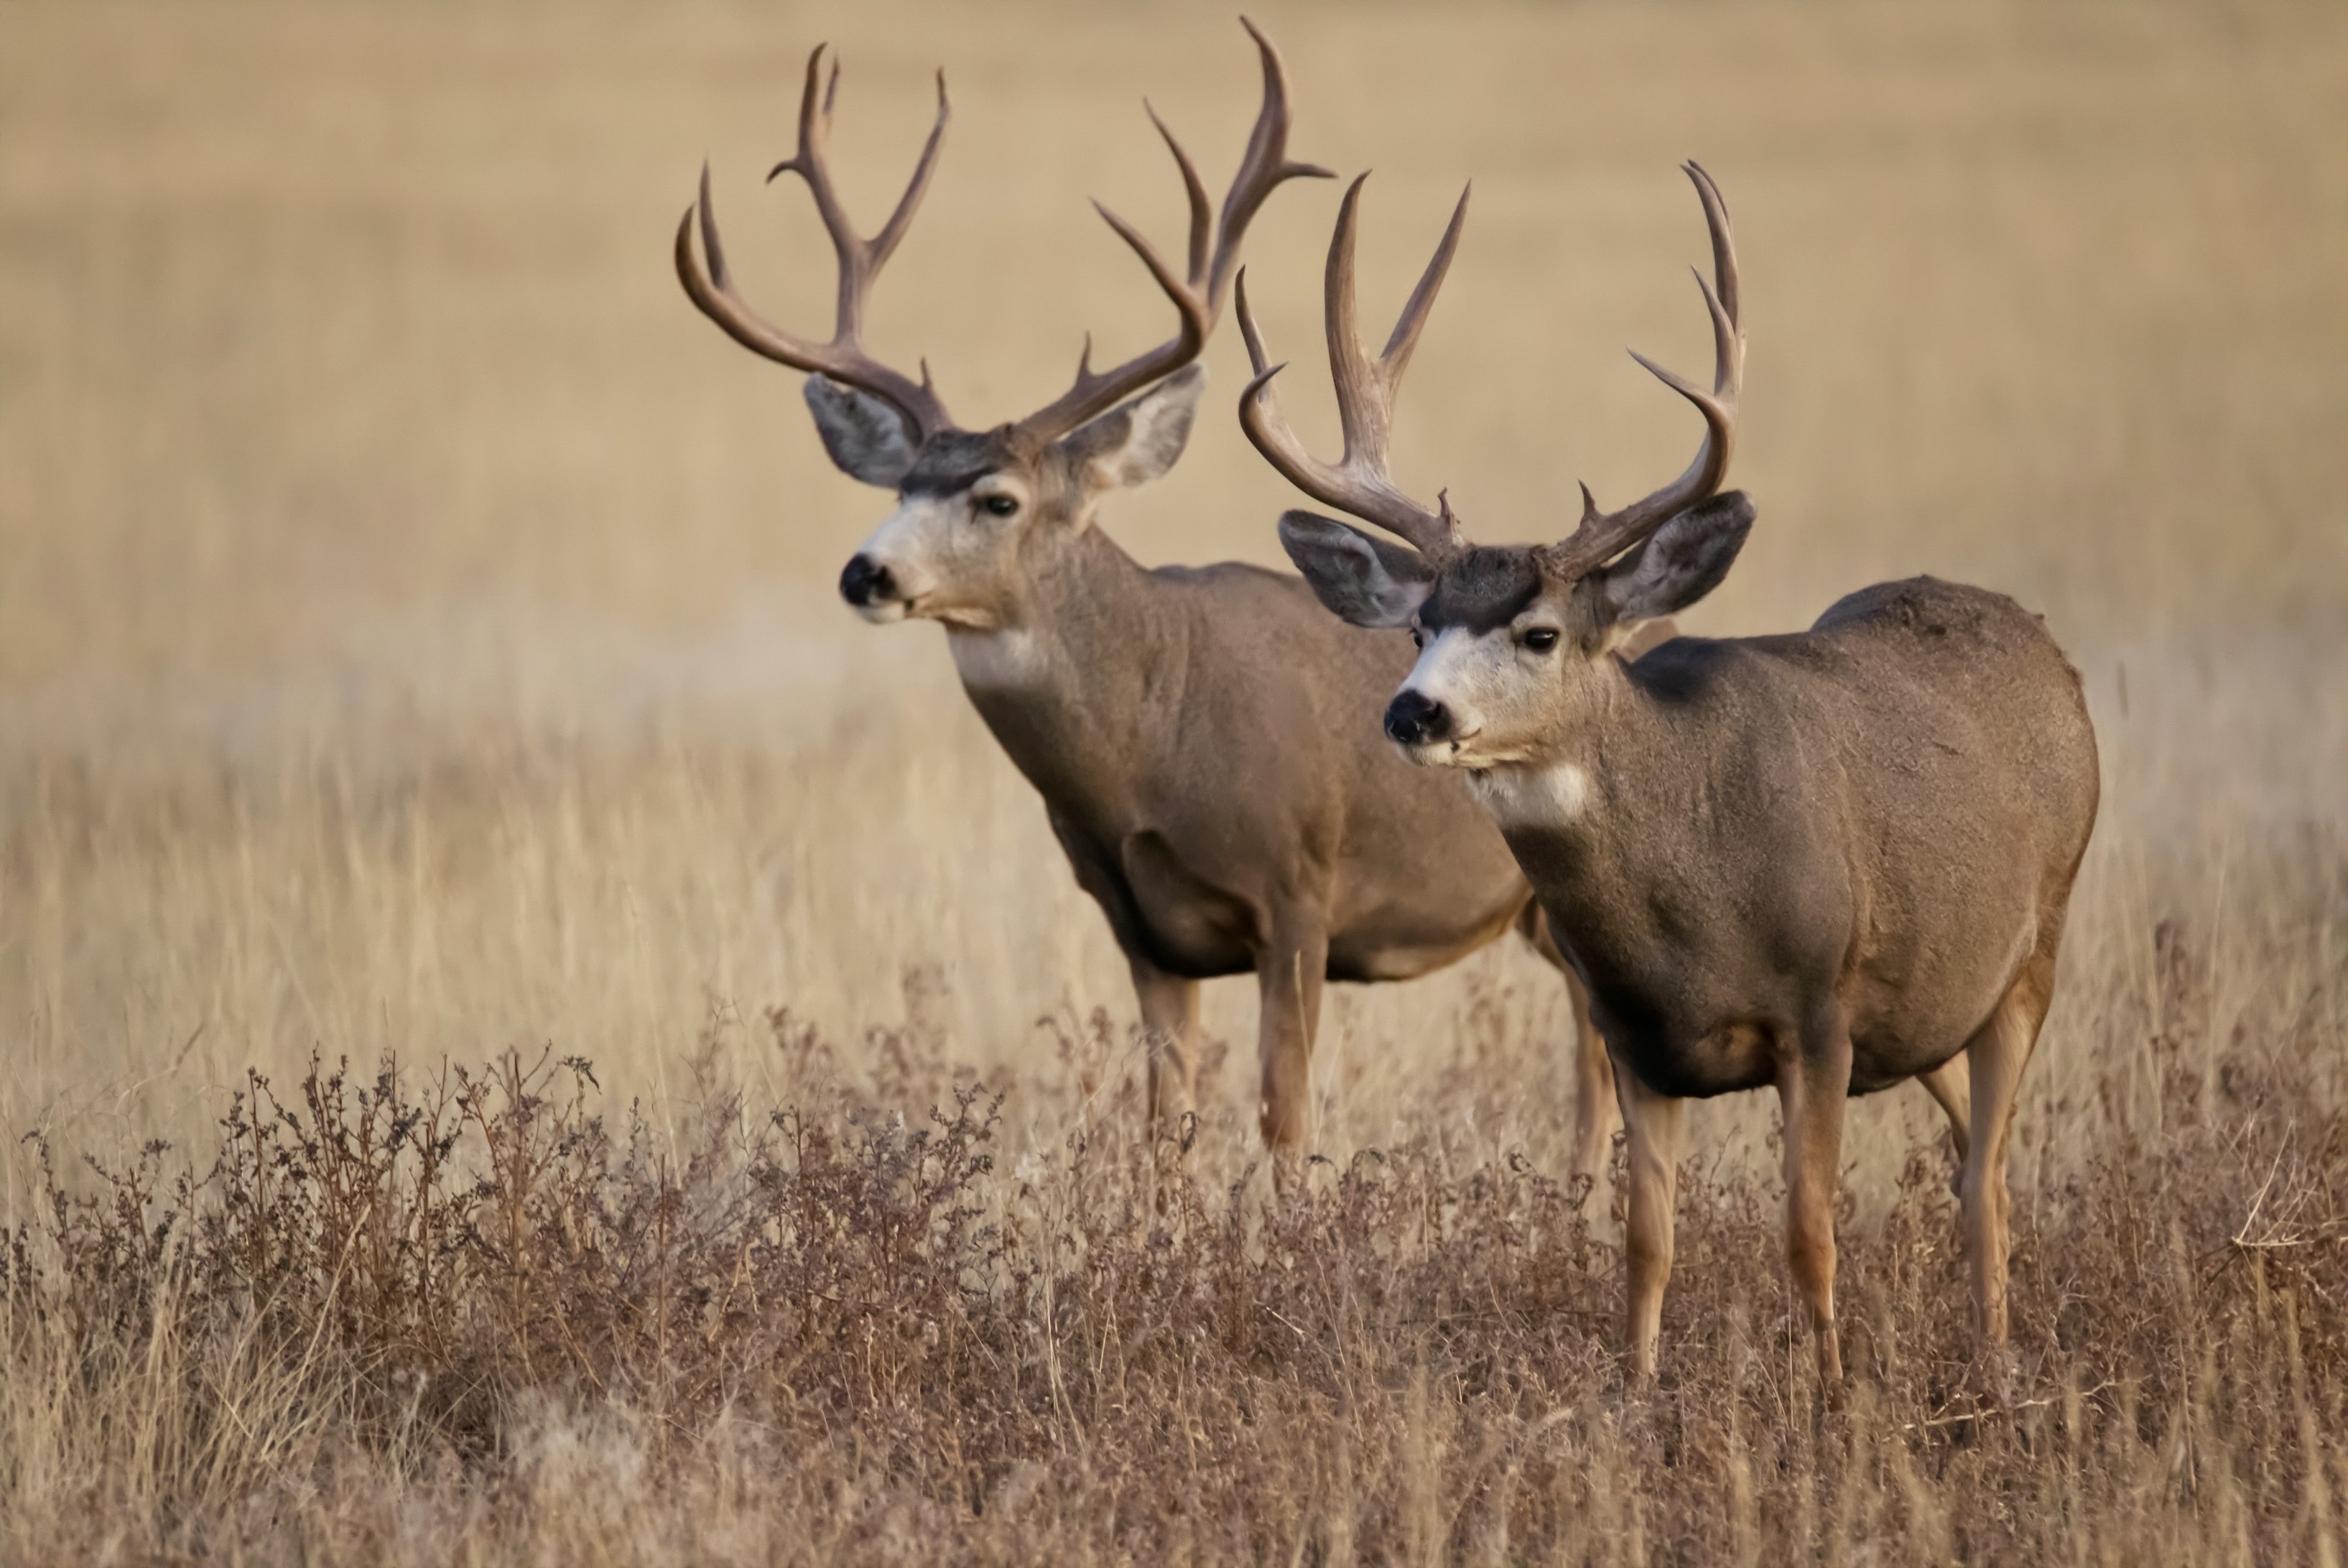 Scientists to Study ‘Walking-Dead’ Deer in Wyoming’s Most CWD-Infected Herd